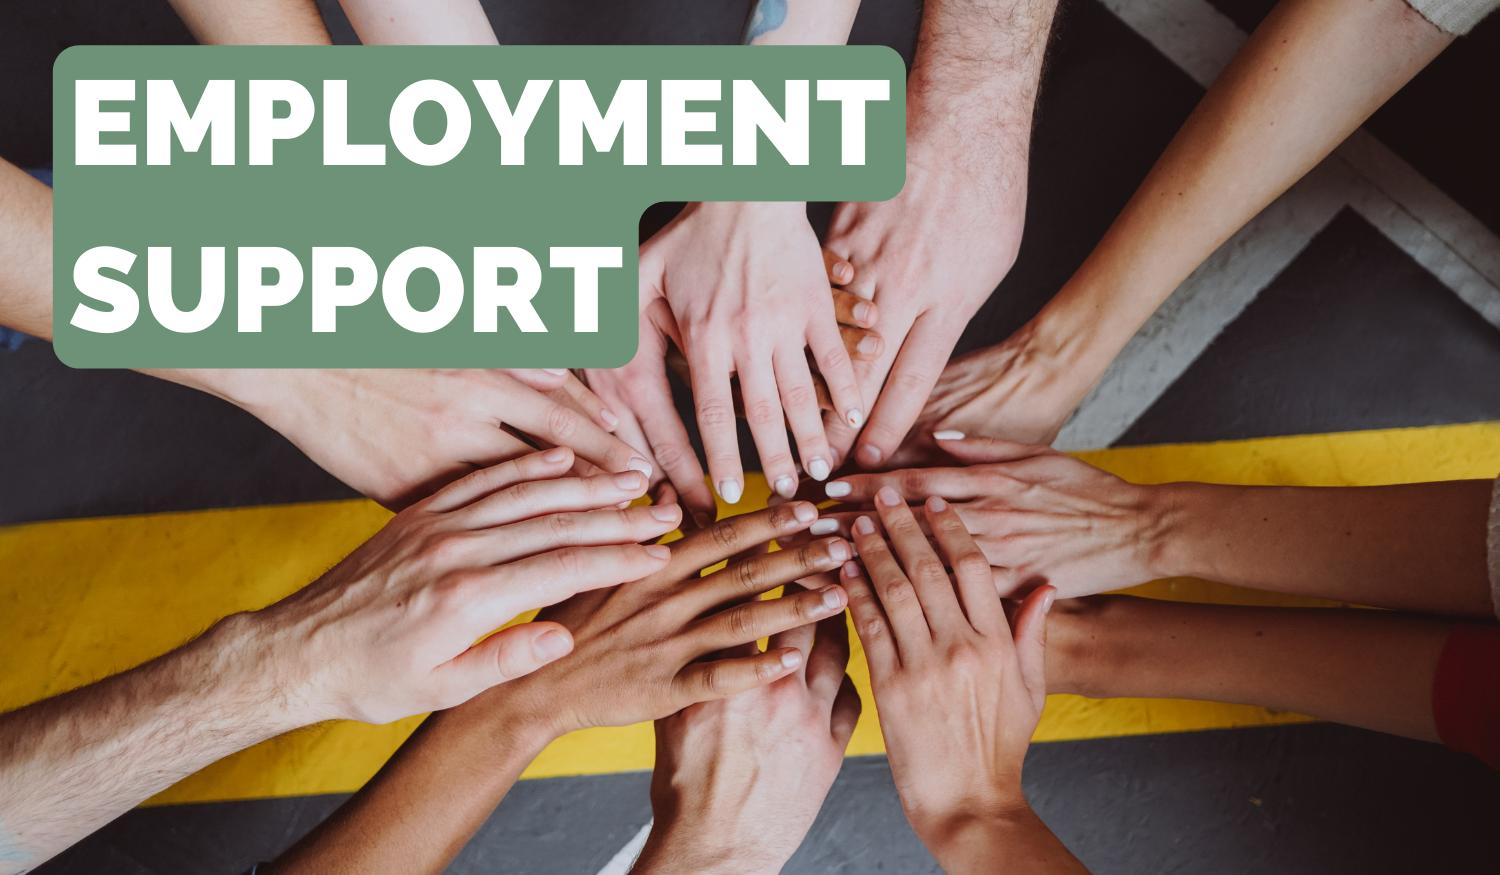 Employment Support